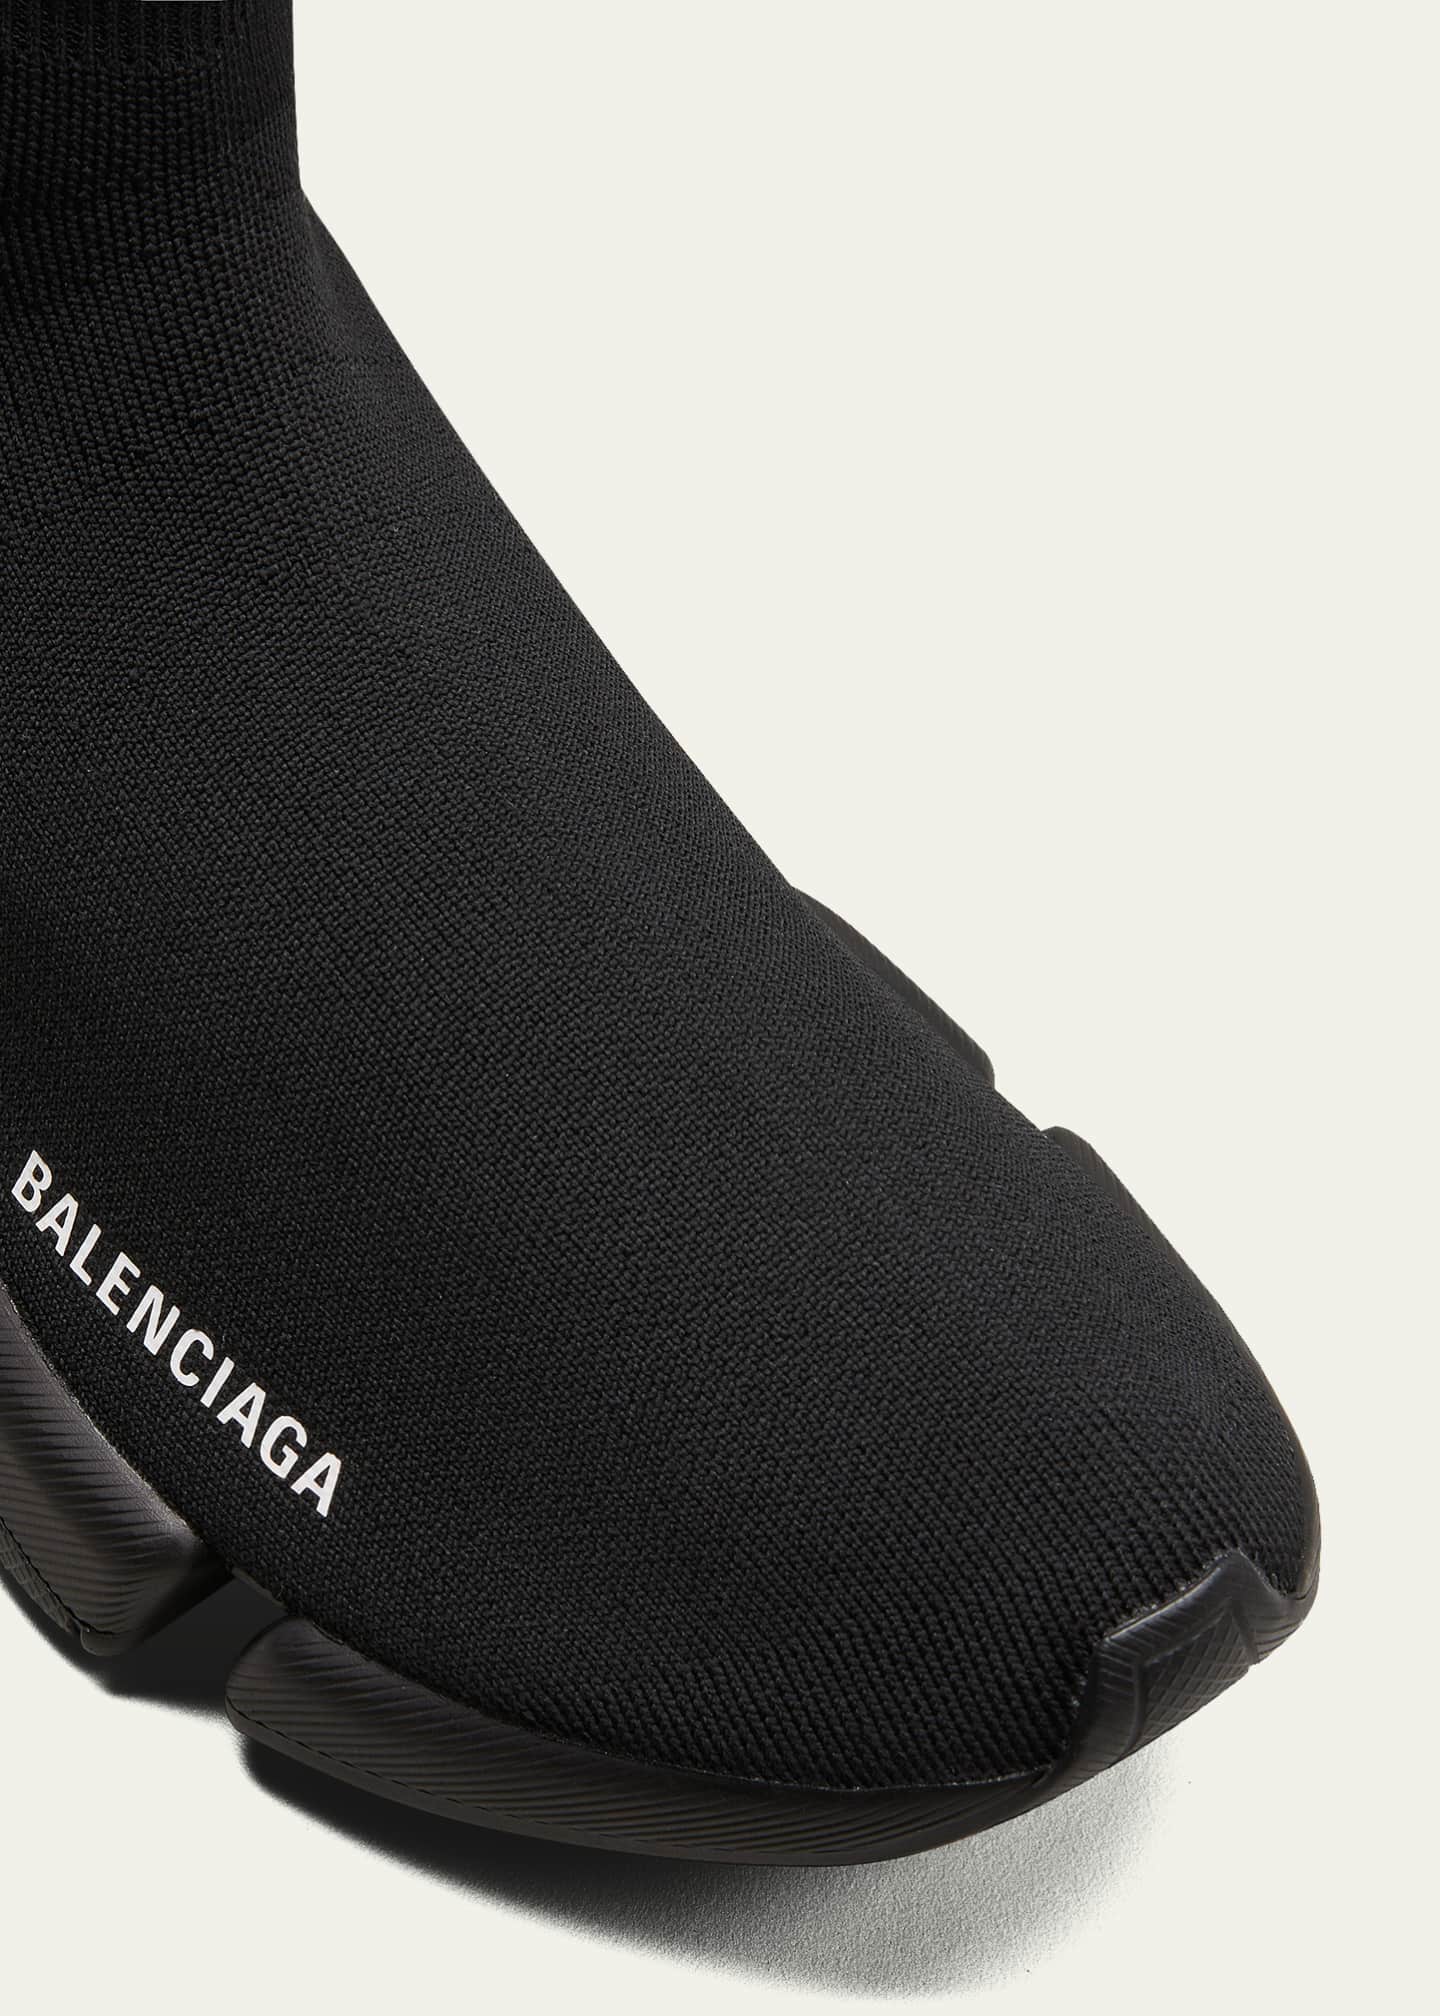 Balenciaga Speed Knit Sock Trainer Sneakers - Bergdorf Goodman